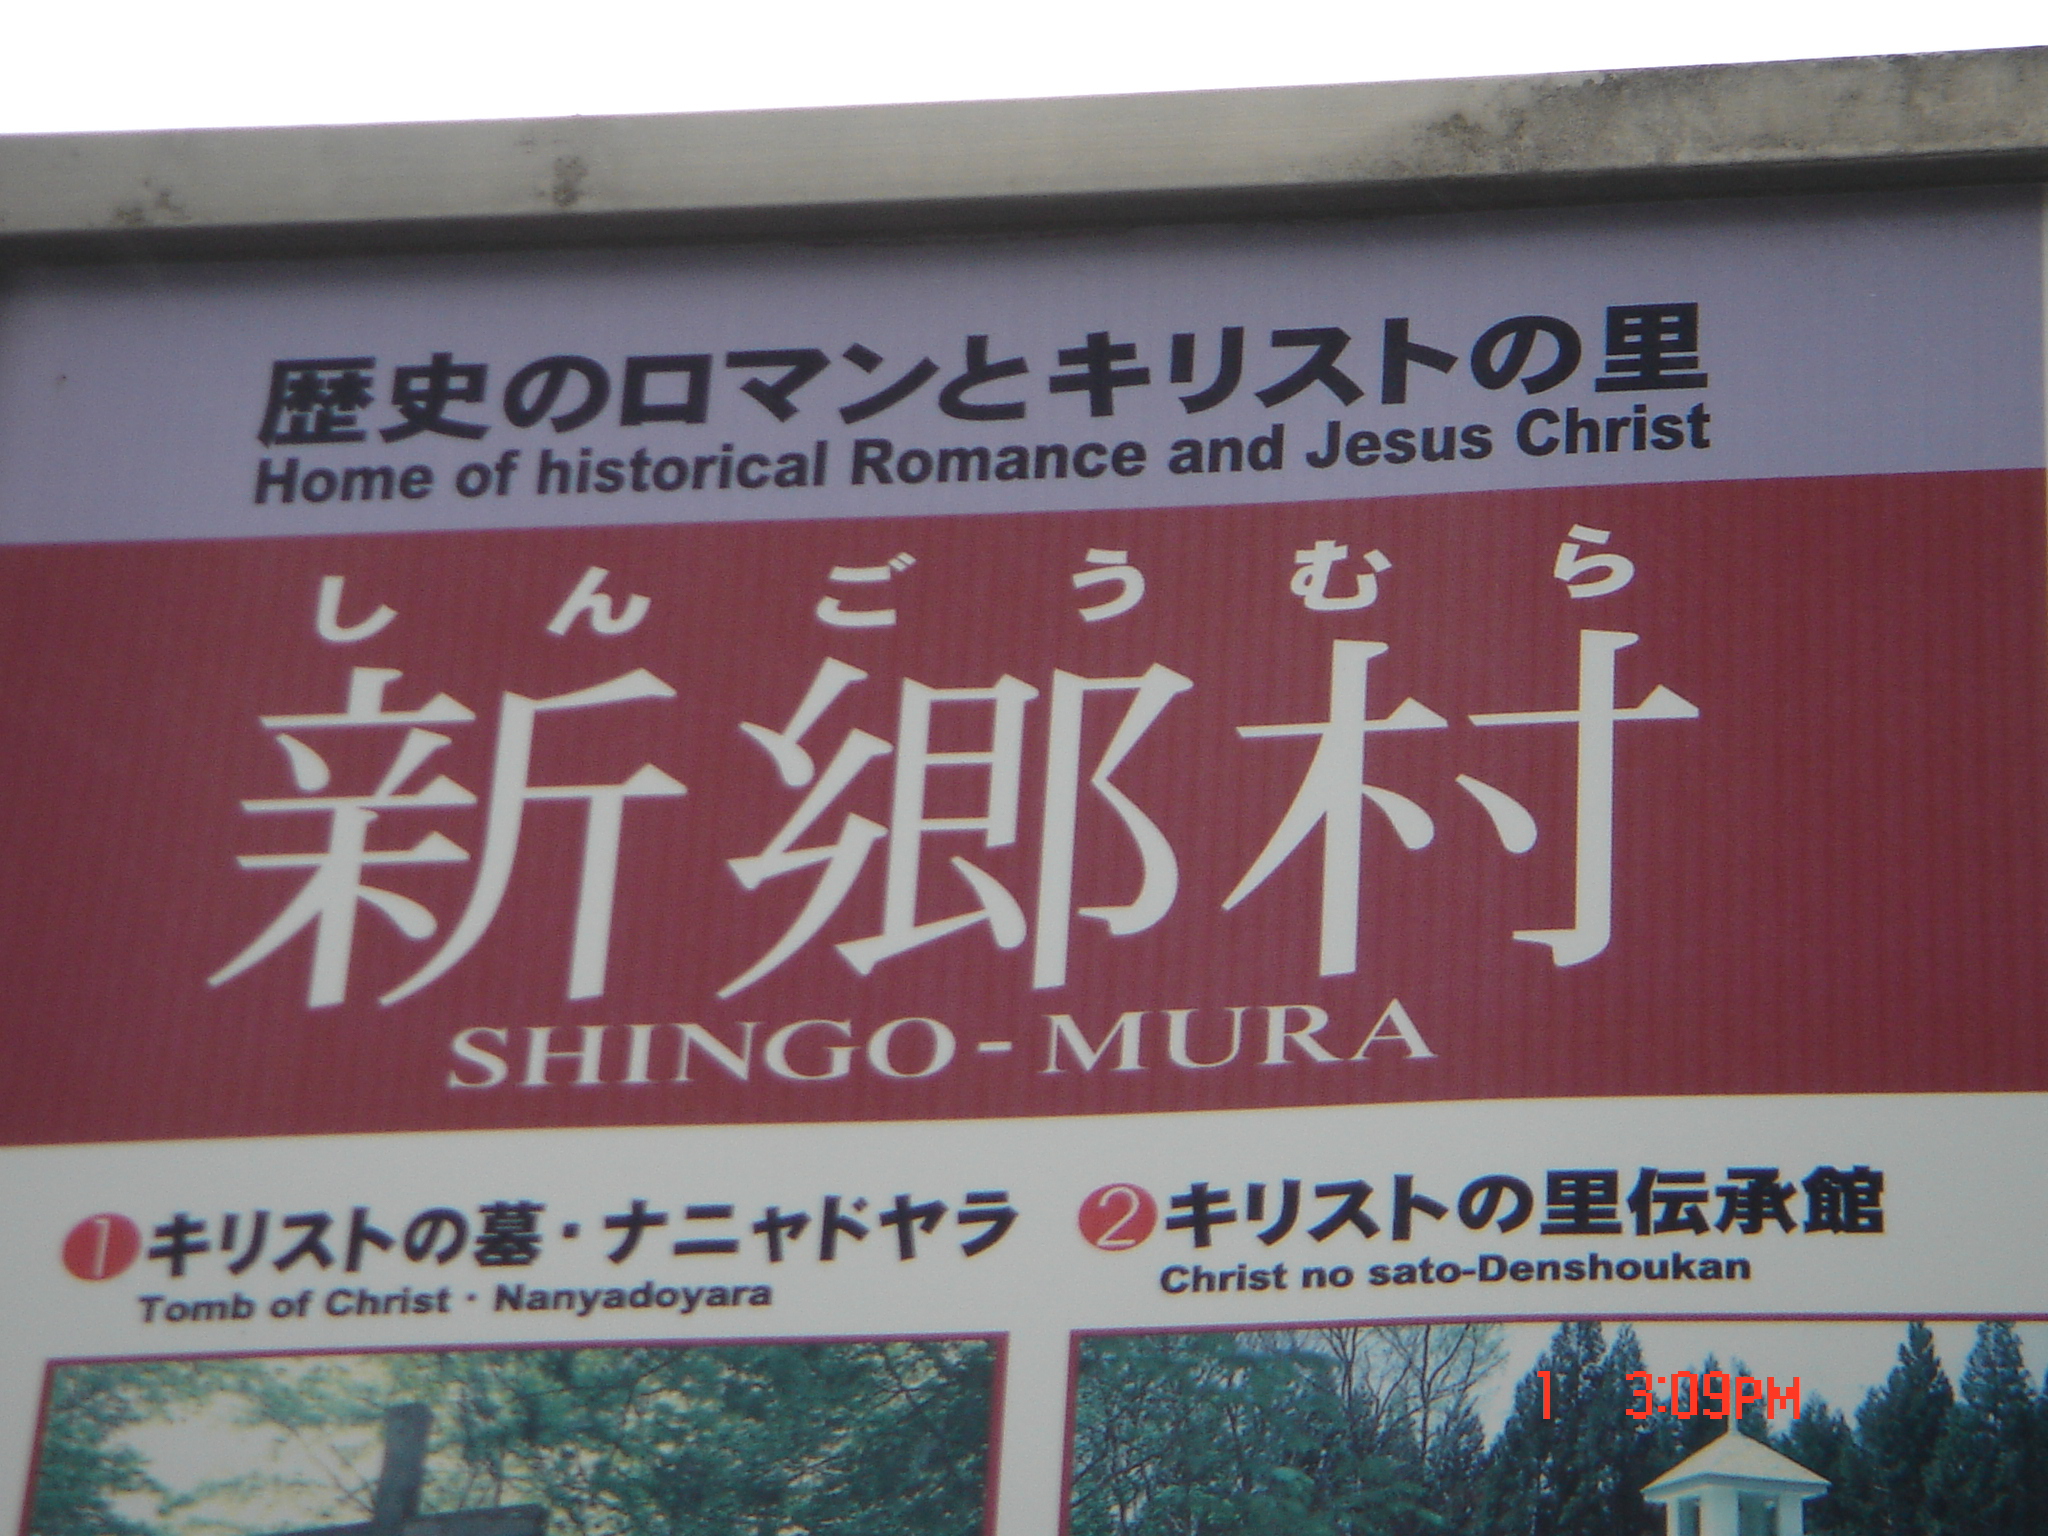 Tourist billboard for Shingo Mura